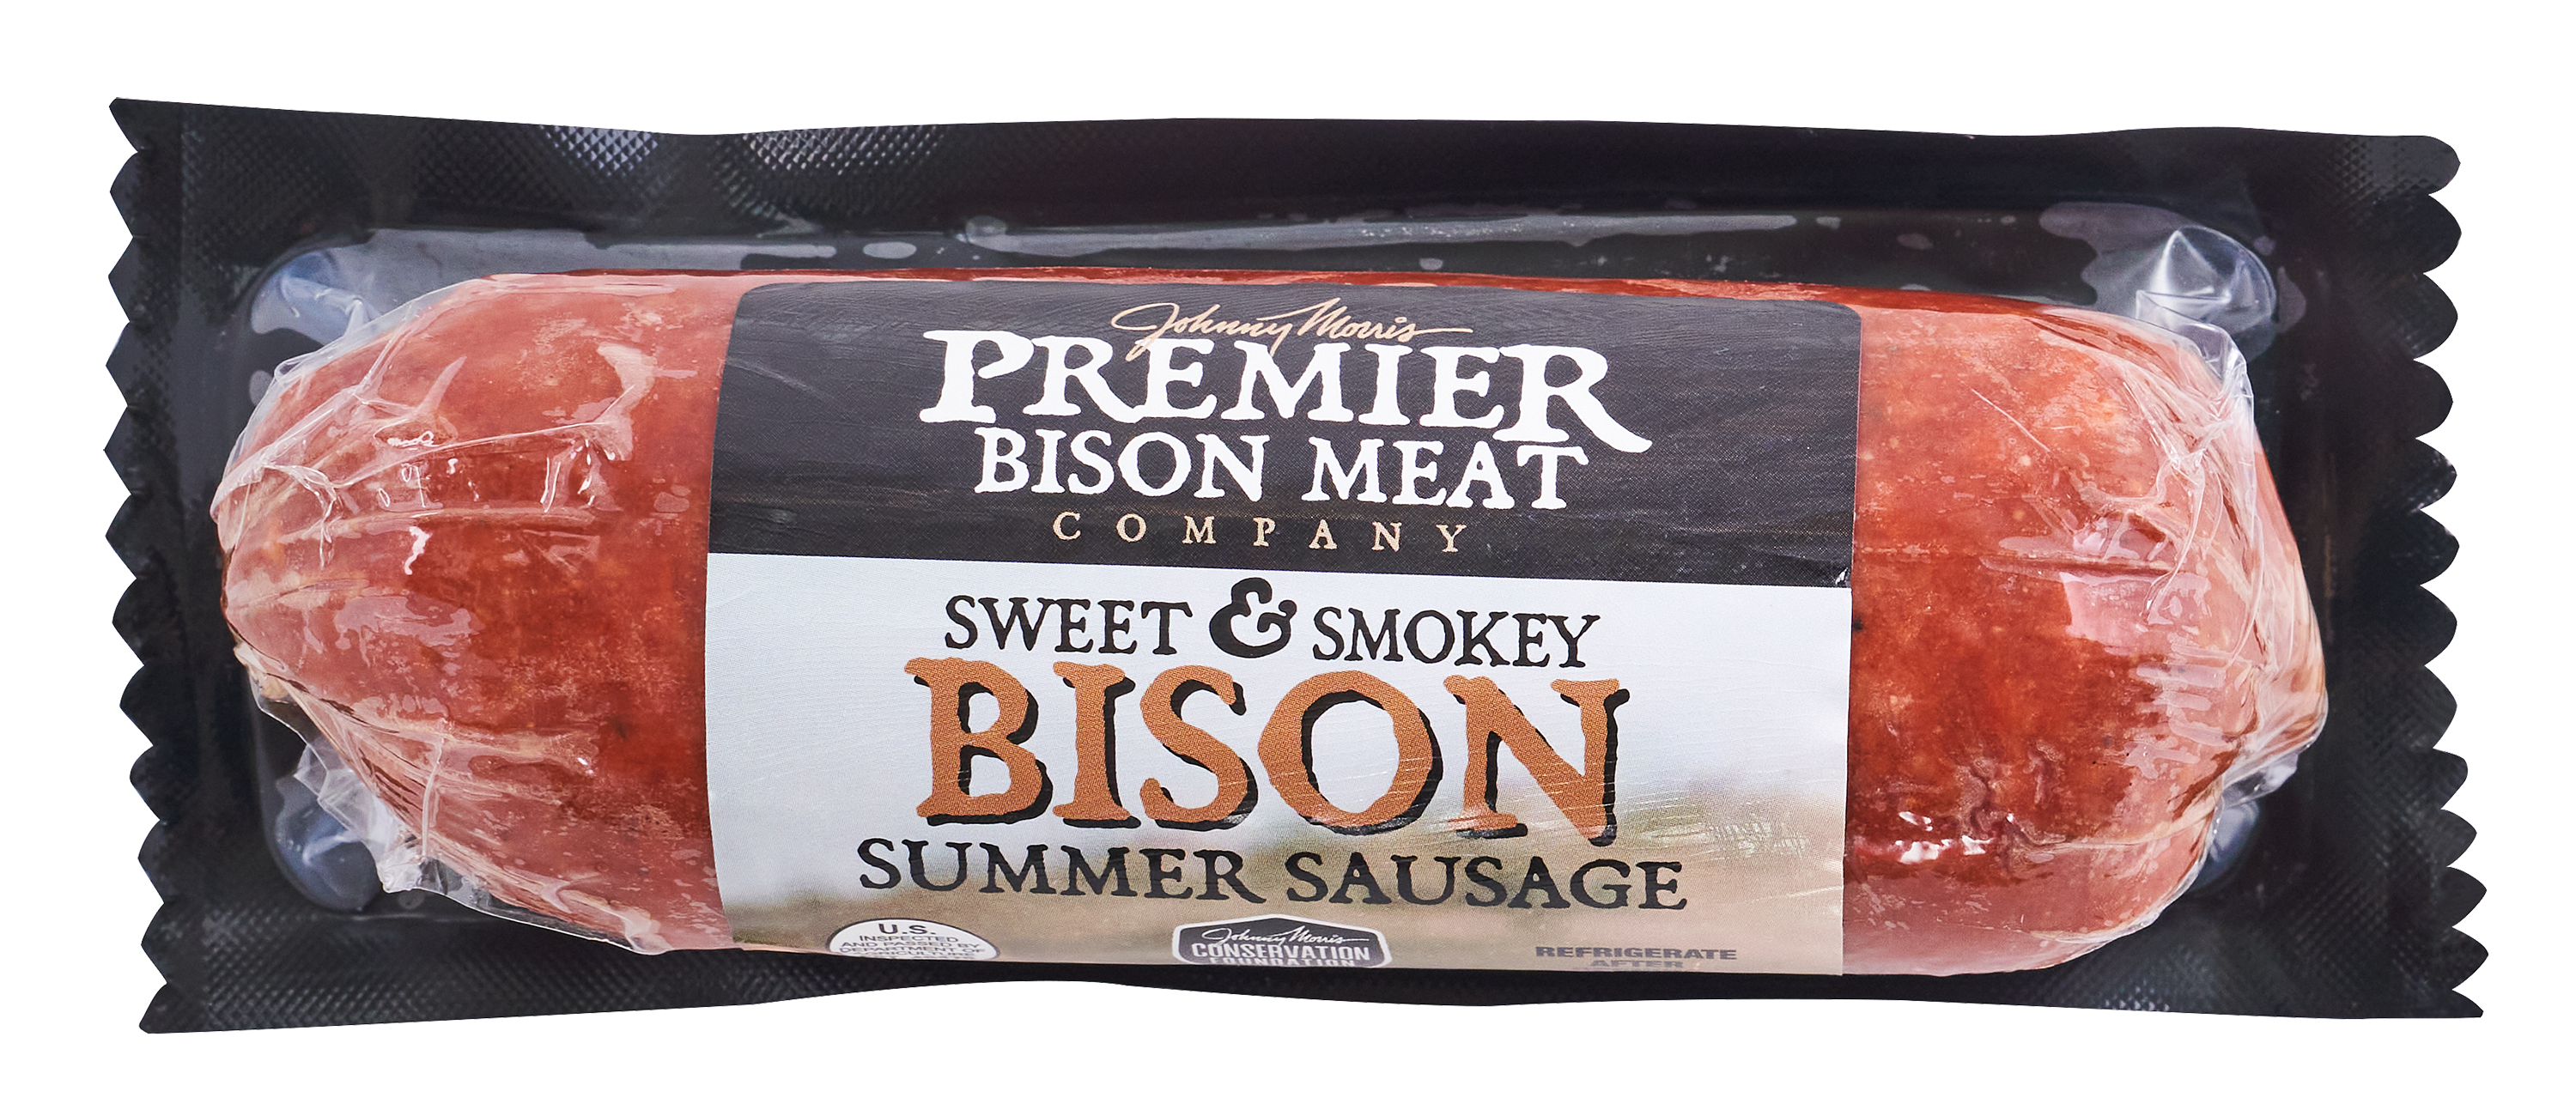 Johnny Morris' Premier Bison Meat Company Sweet and Smoky Bison Summer Sausage